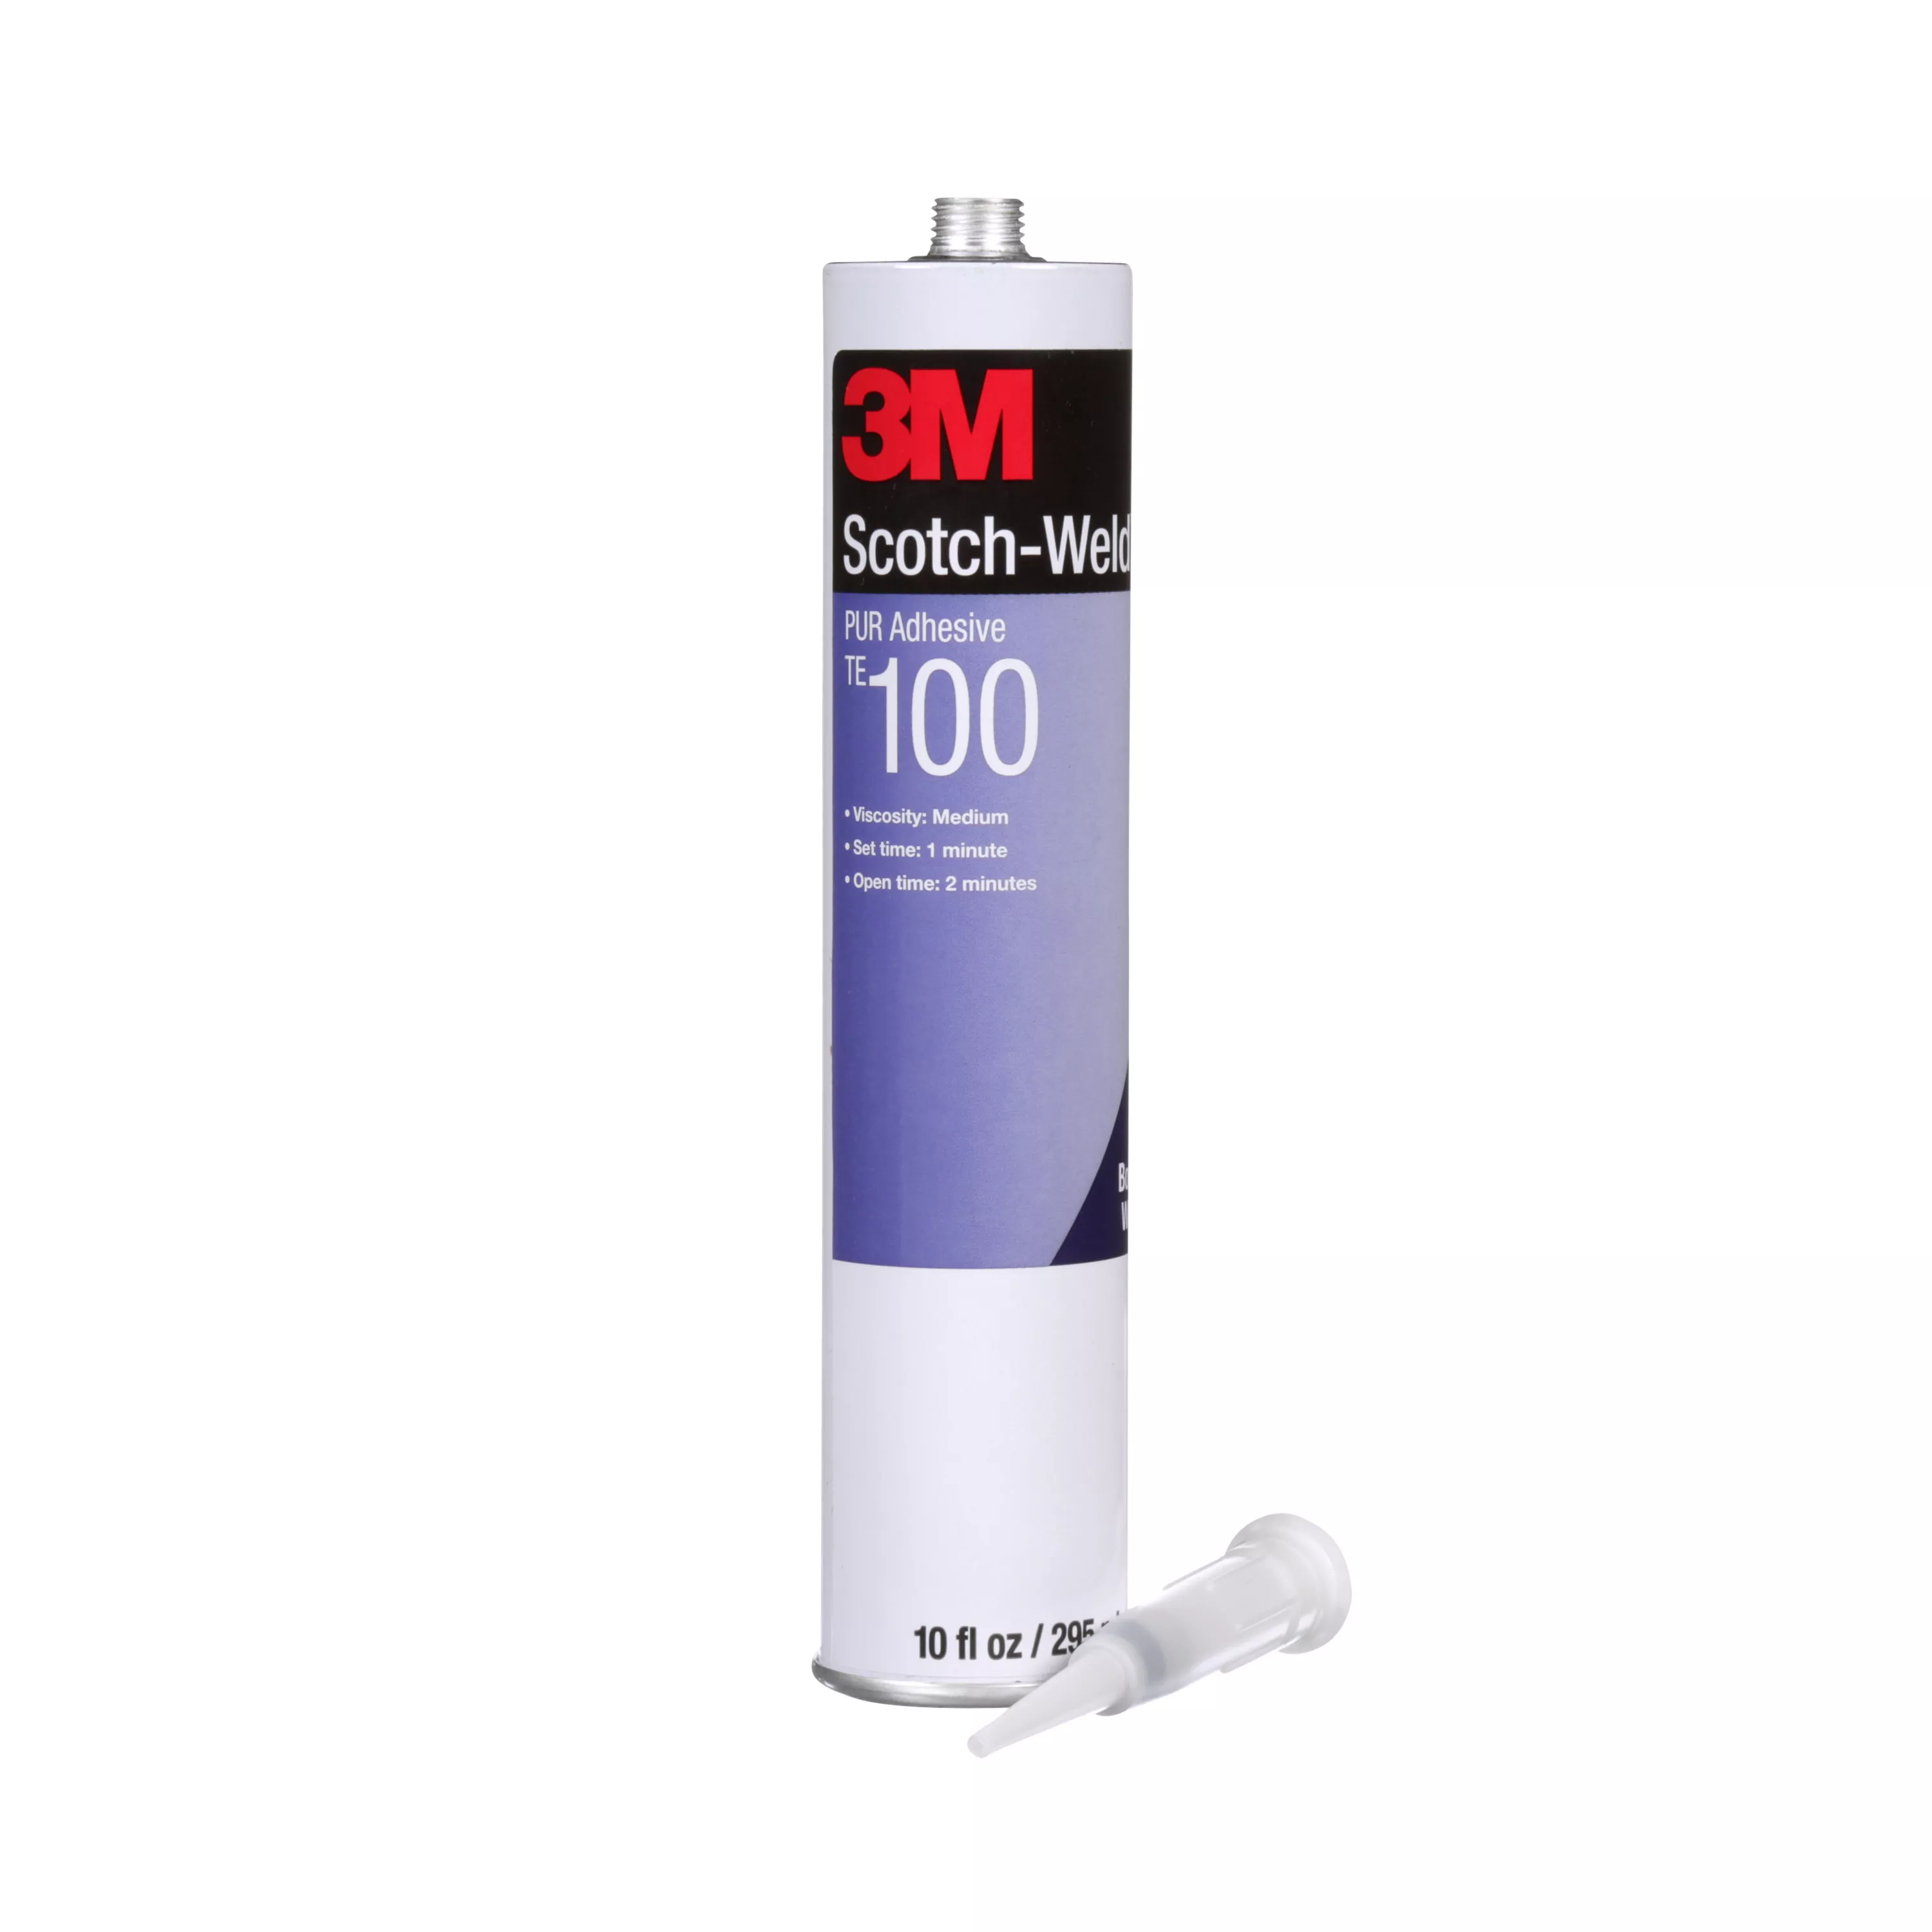 3M™ Scotch-Weld™ PUR Adhesive TE100, Off-White, 1/10 Gallon Cartidge, 5
Bottle/Case